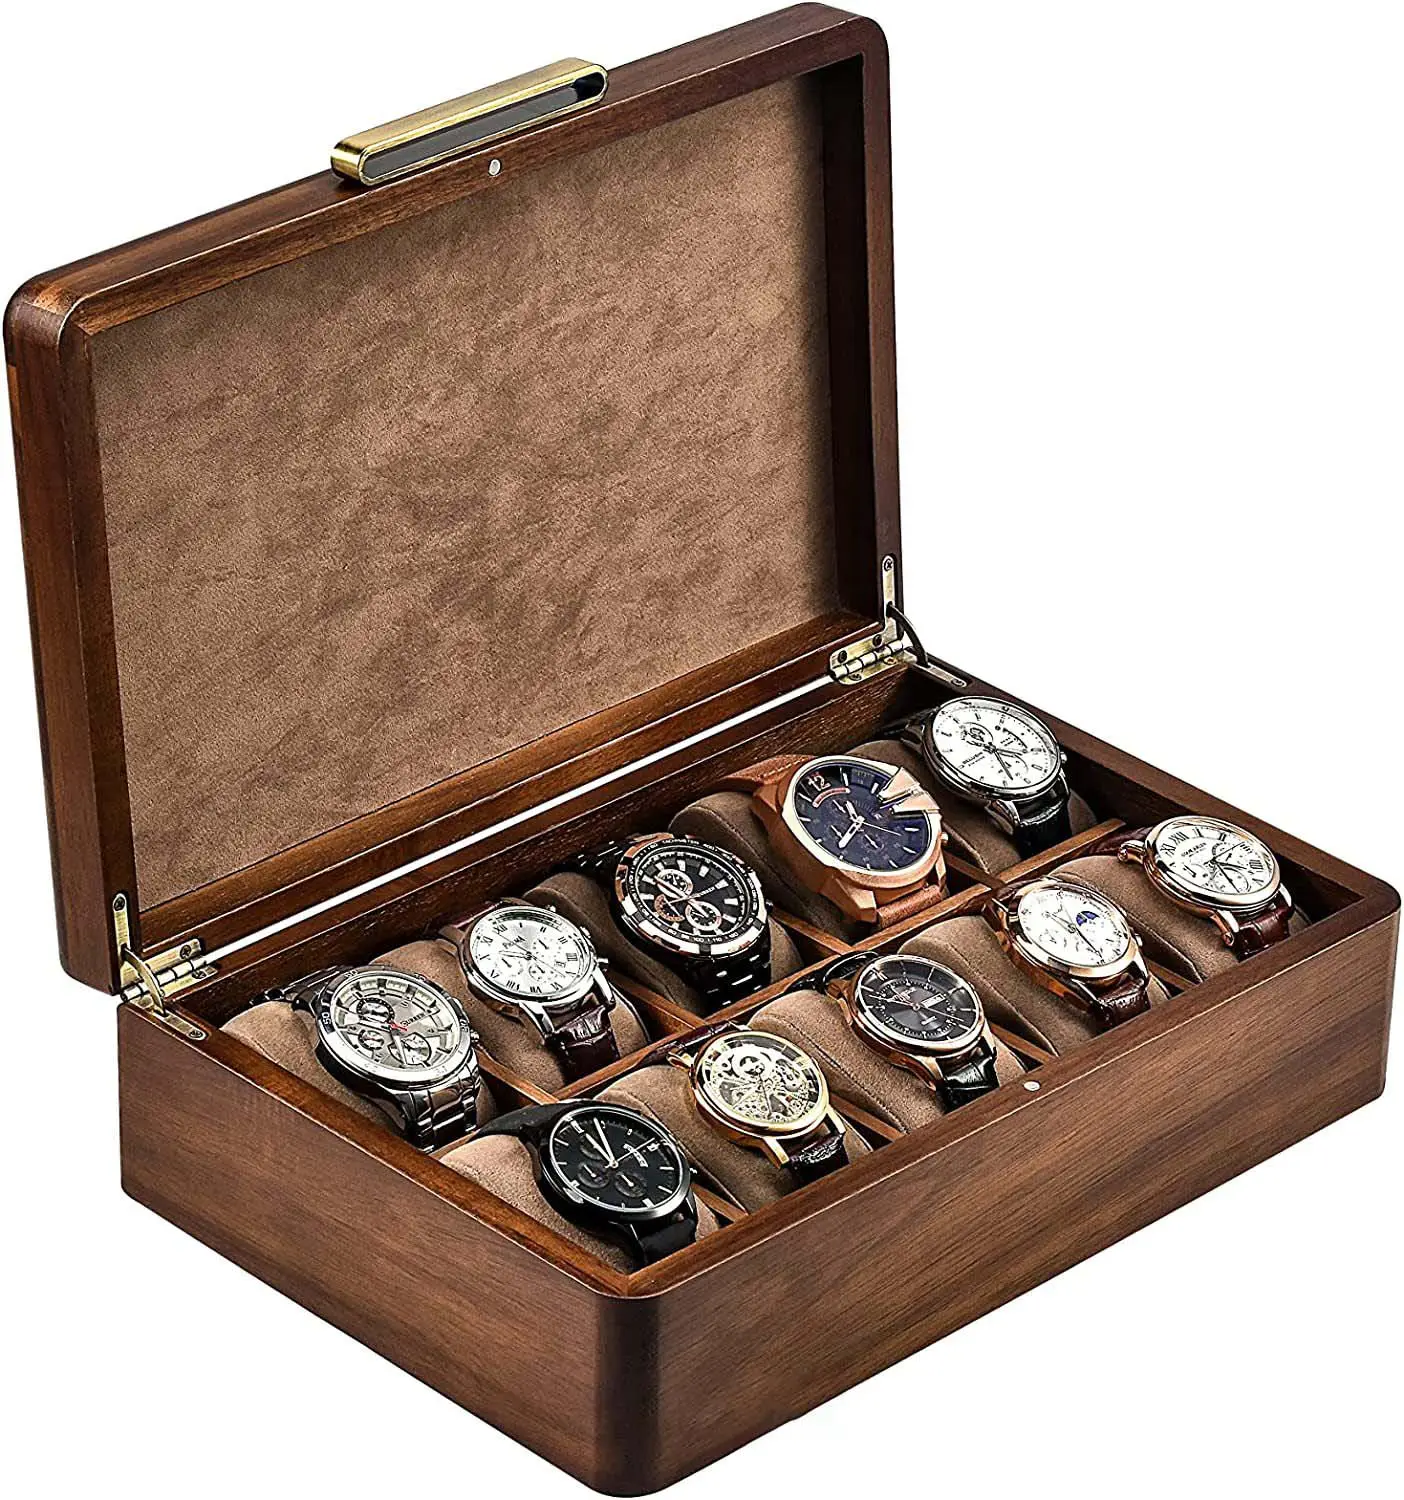 Jewelry Watch Box Luxury Women 10 slots Wood Watch Storage Box